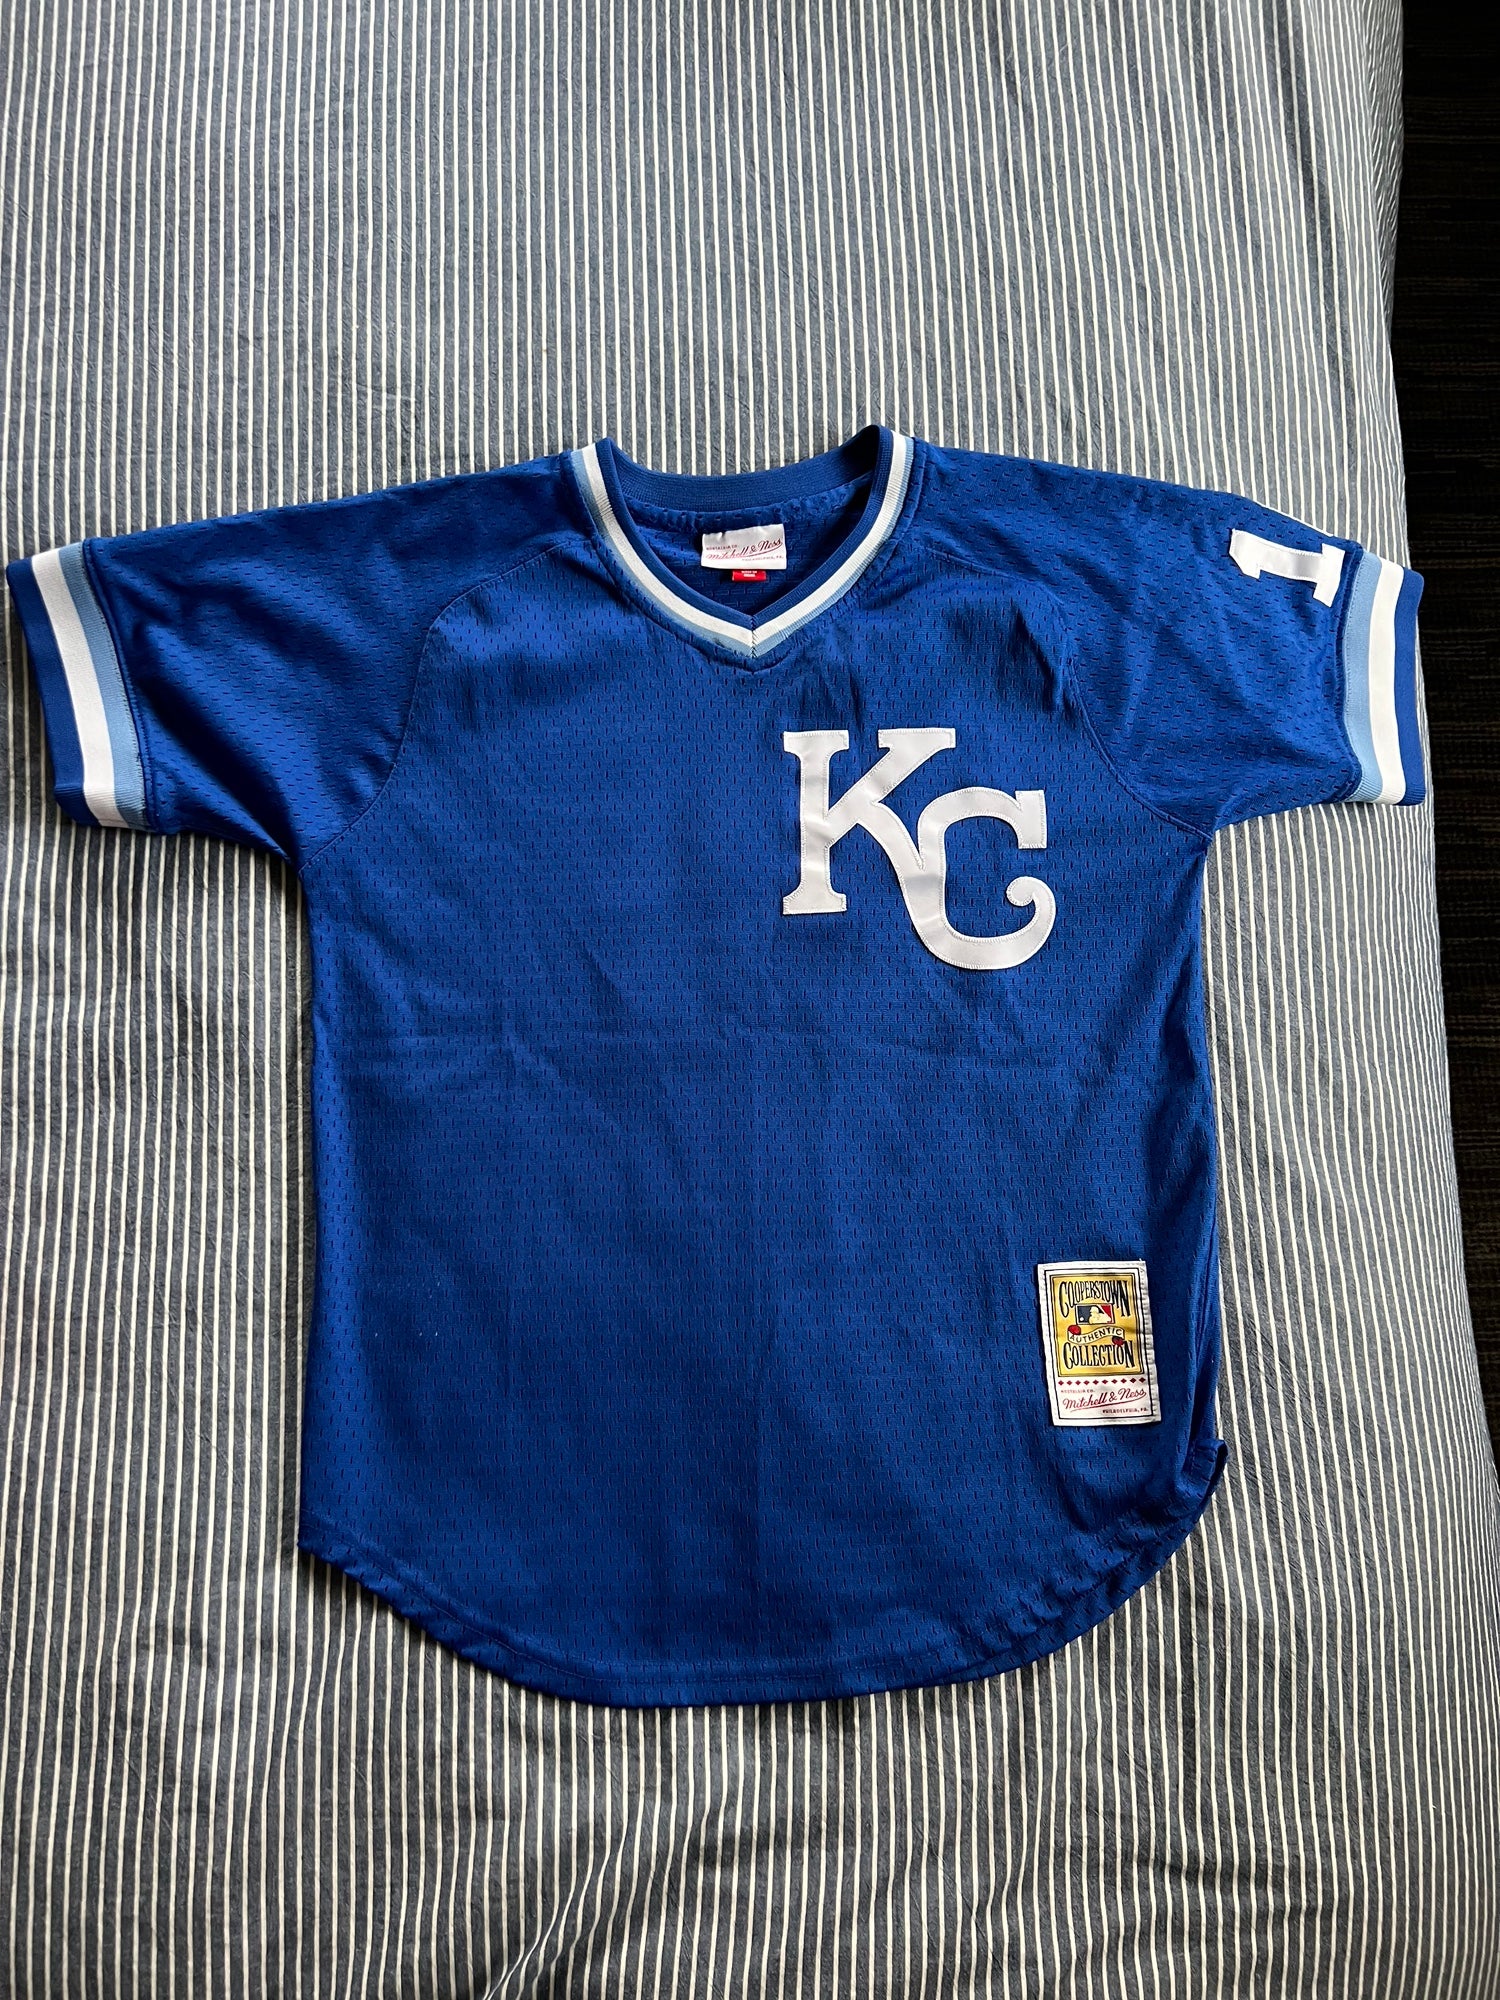 KC Royals BO JACKSON youth L Mitchell & Ness jersey *mint